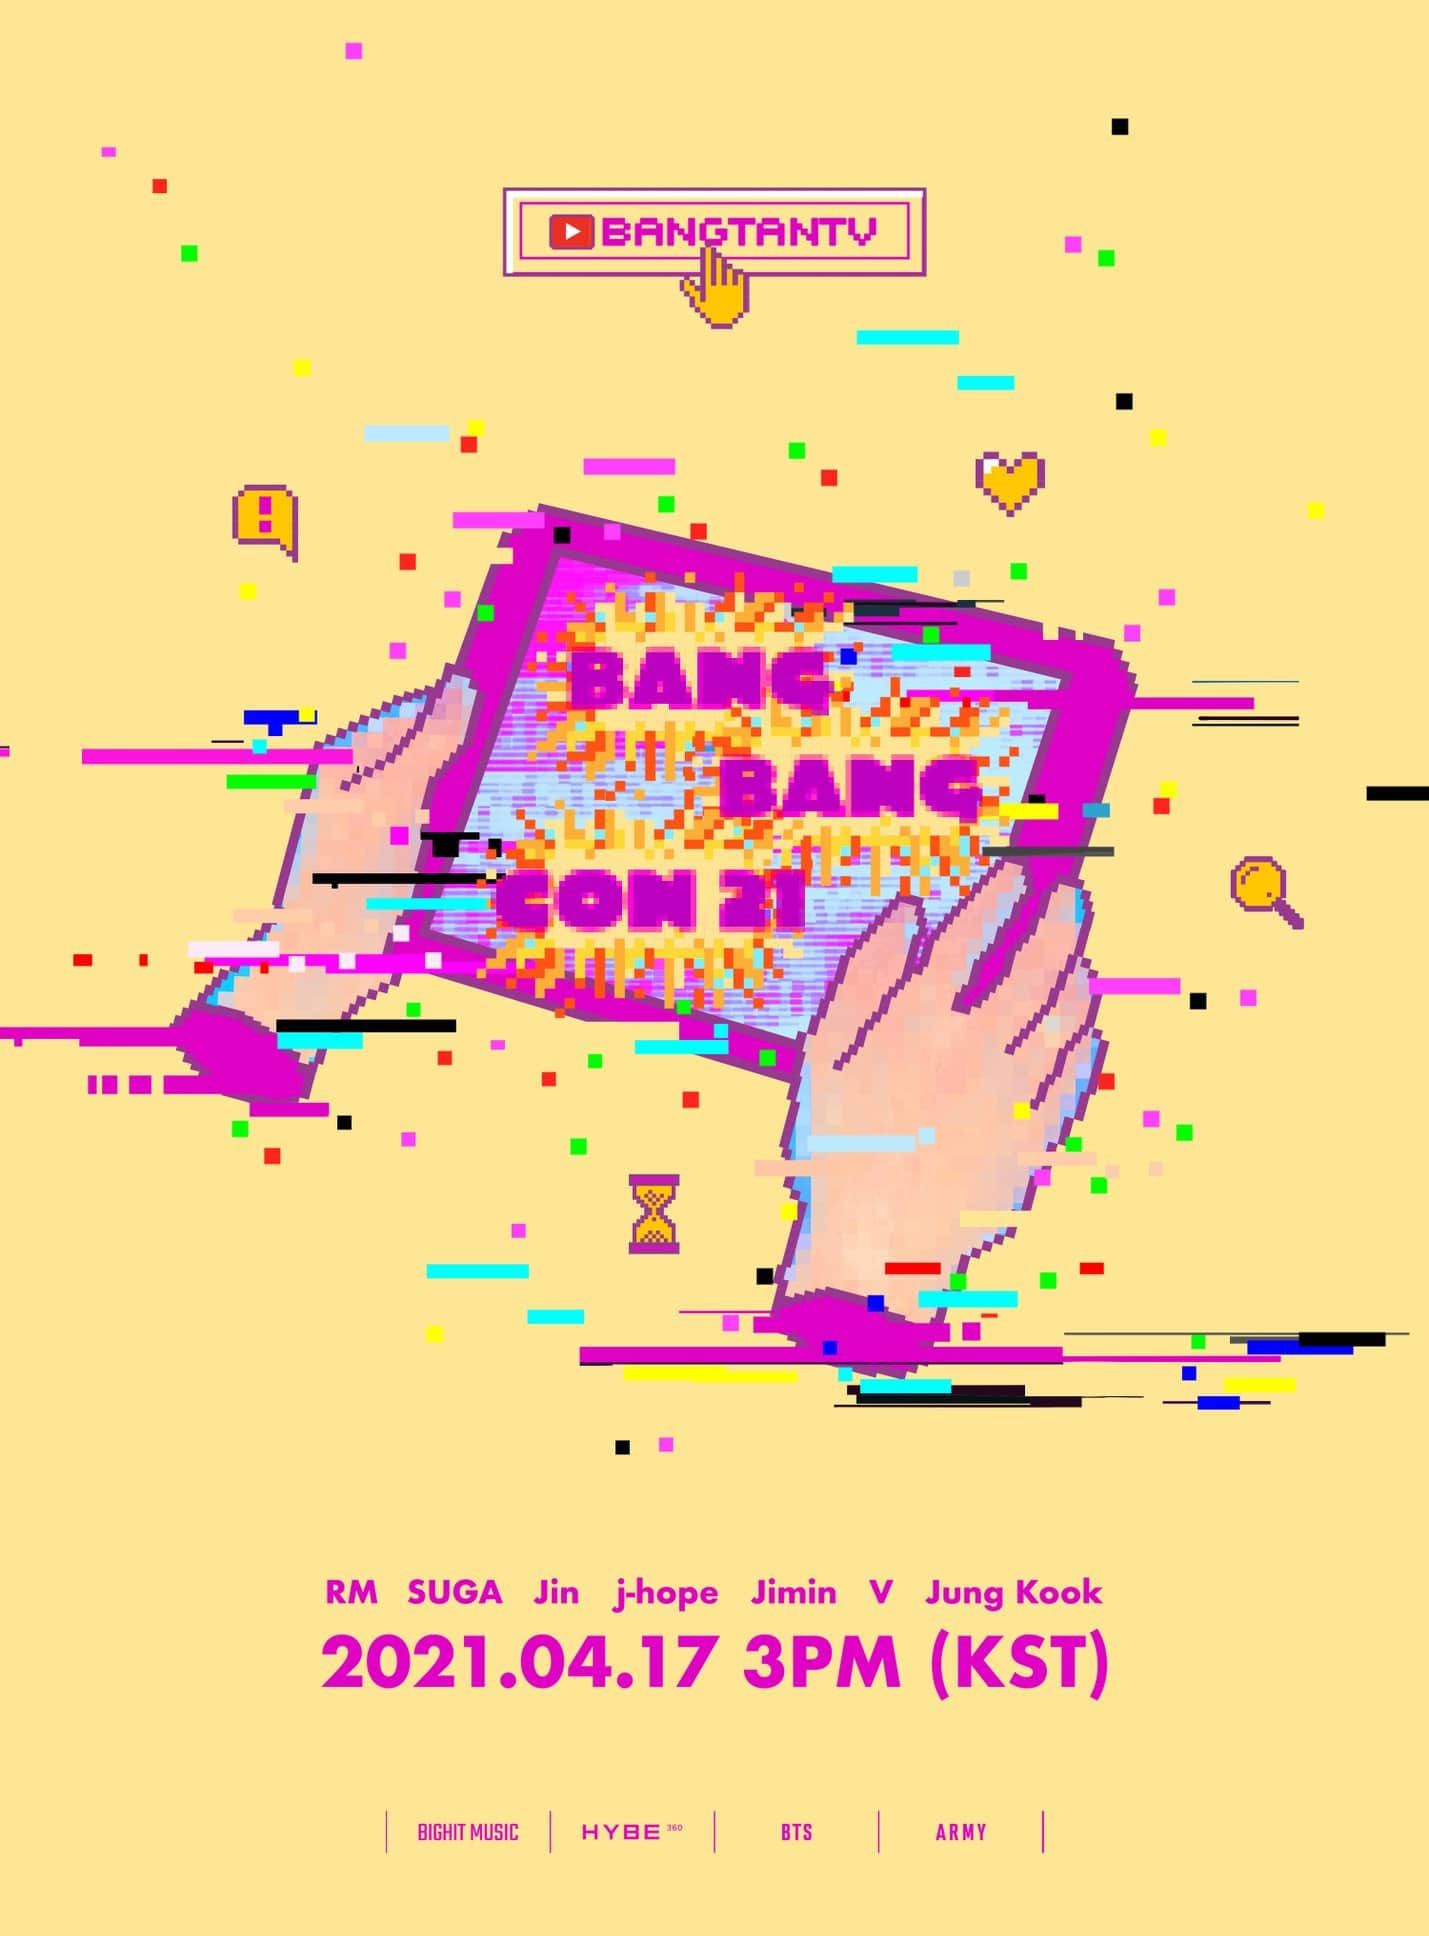 Teaser konser BANGBANGCON21 BTS